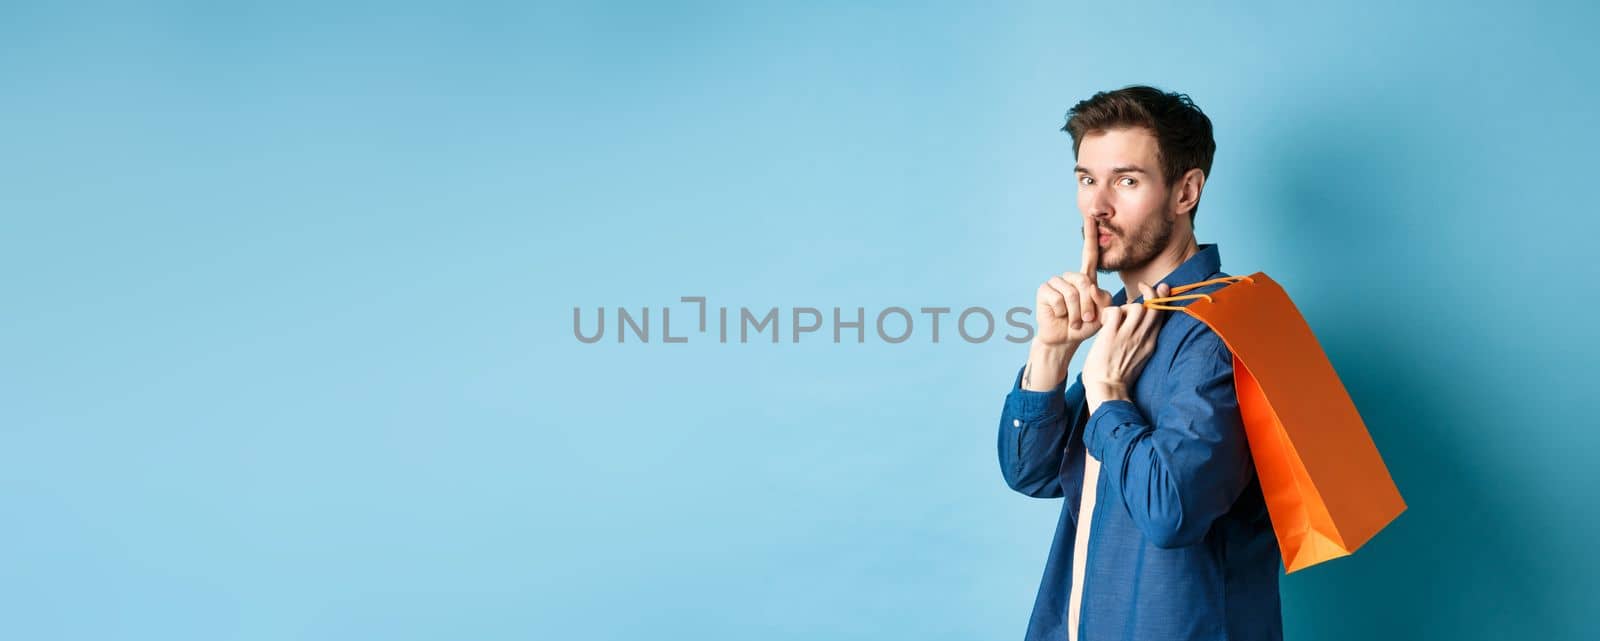 Image of modern guy holding shopping bag on shoulder, turn behind and shushing at camera, telling a secret, making surprise, standing on blue background.